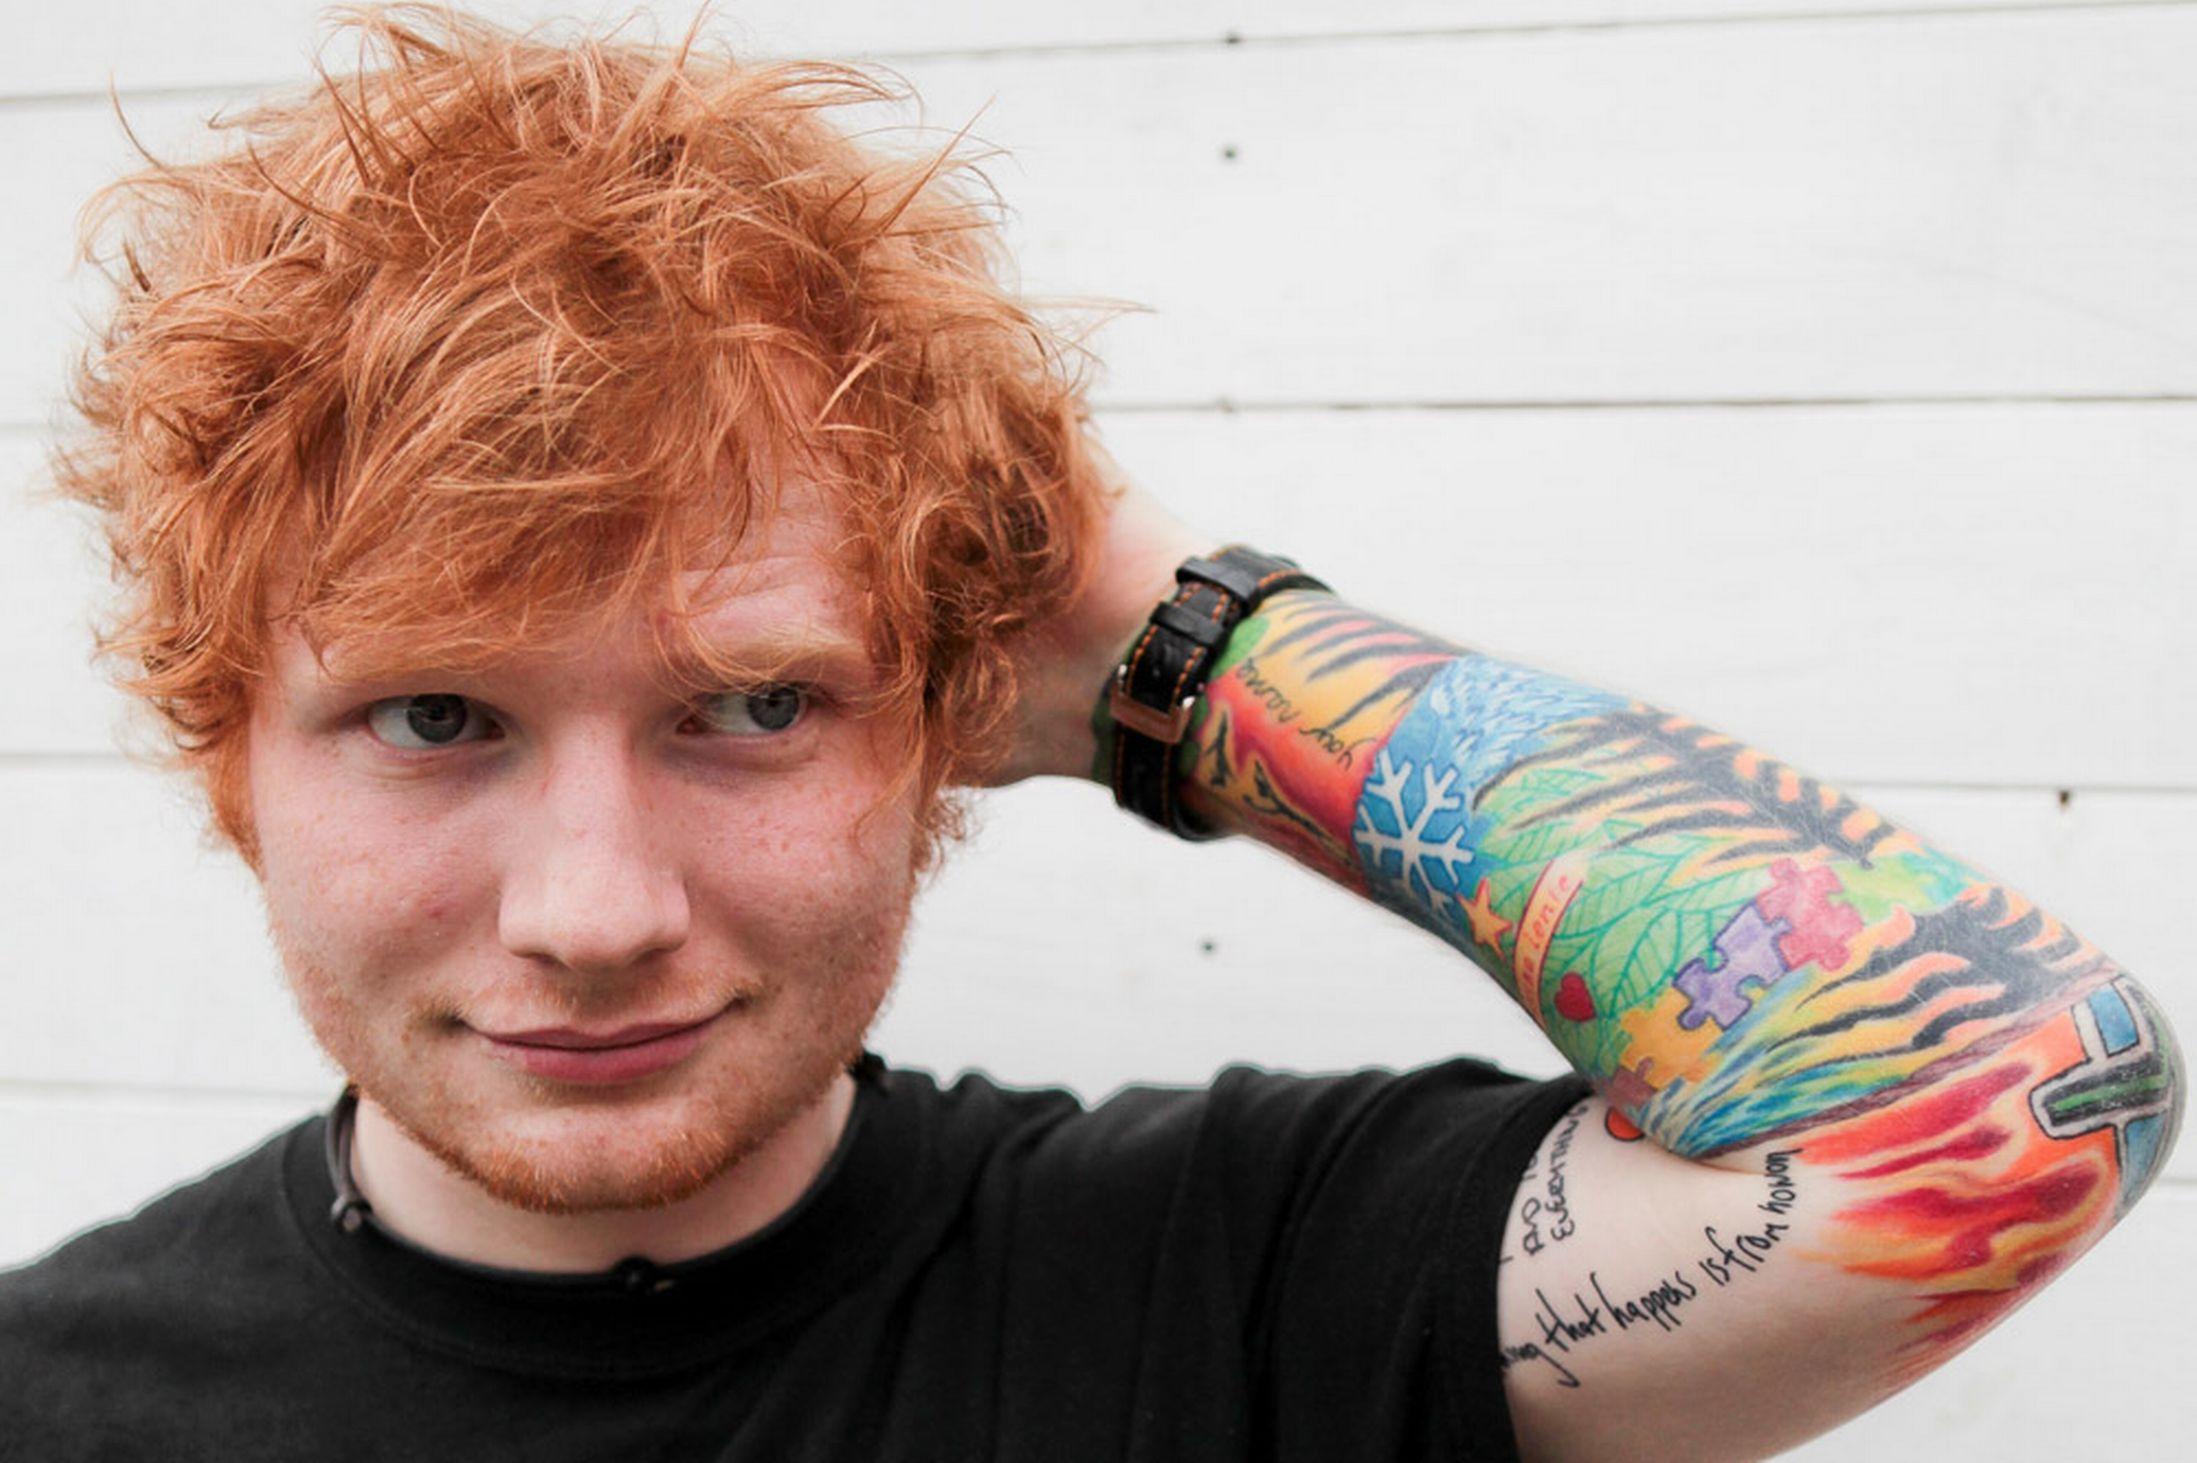 Ed Sheeran Wallpapers for PC